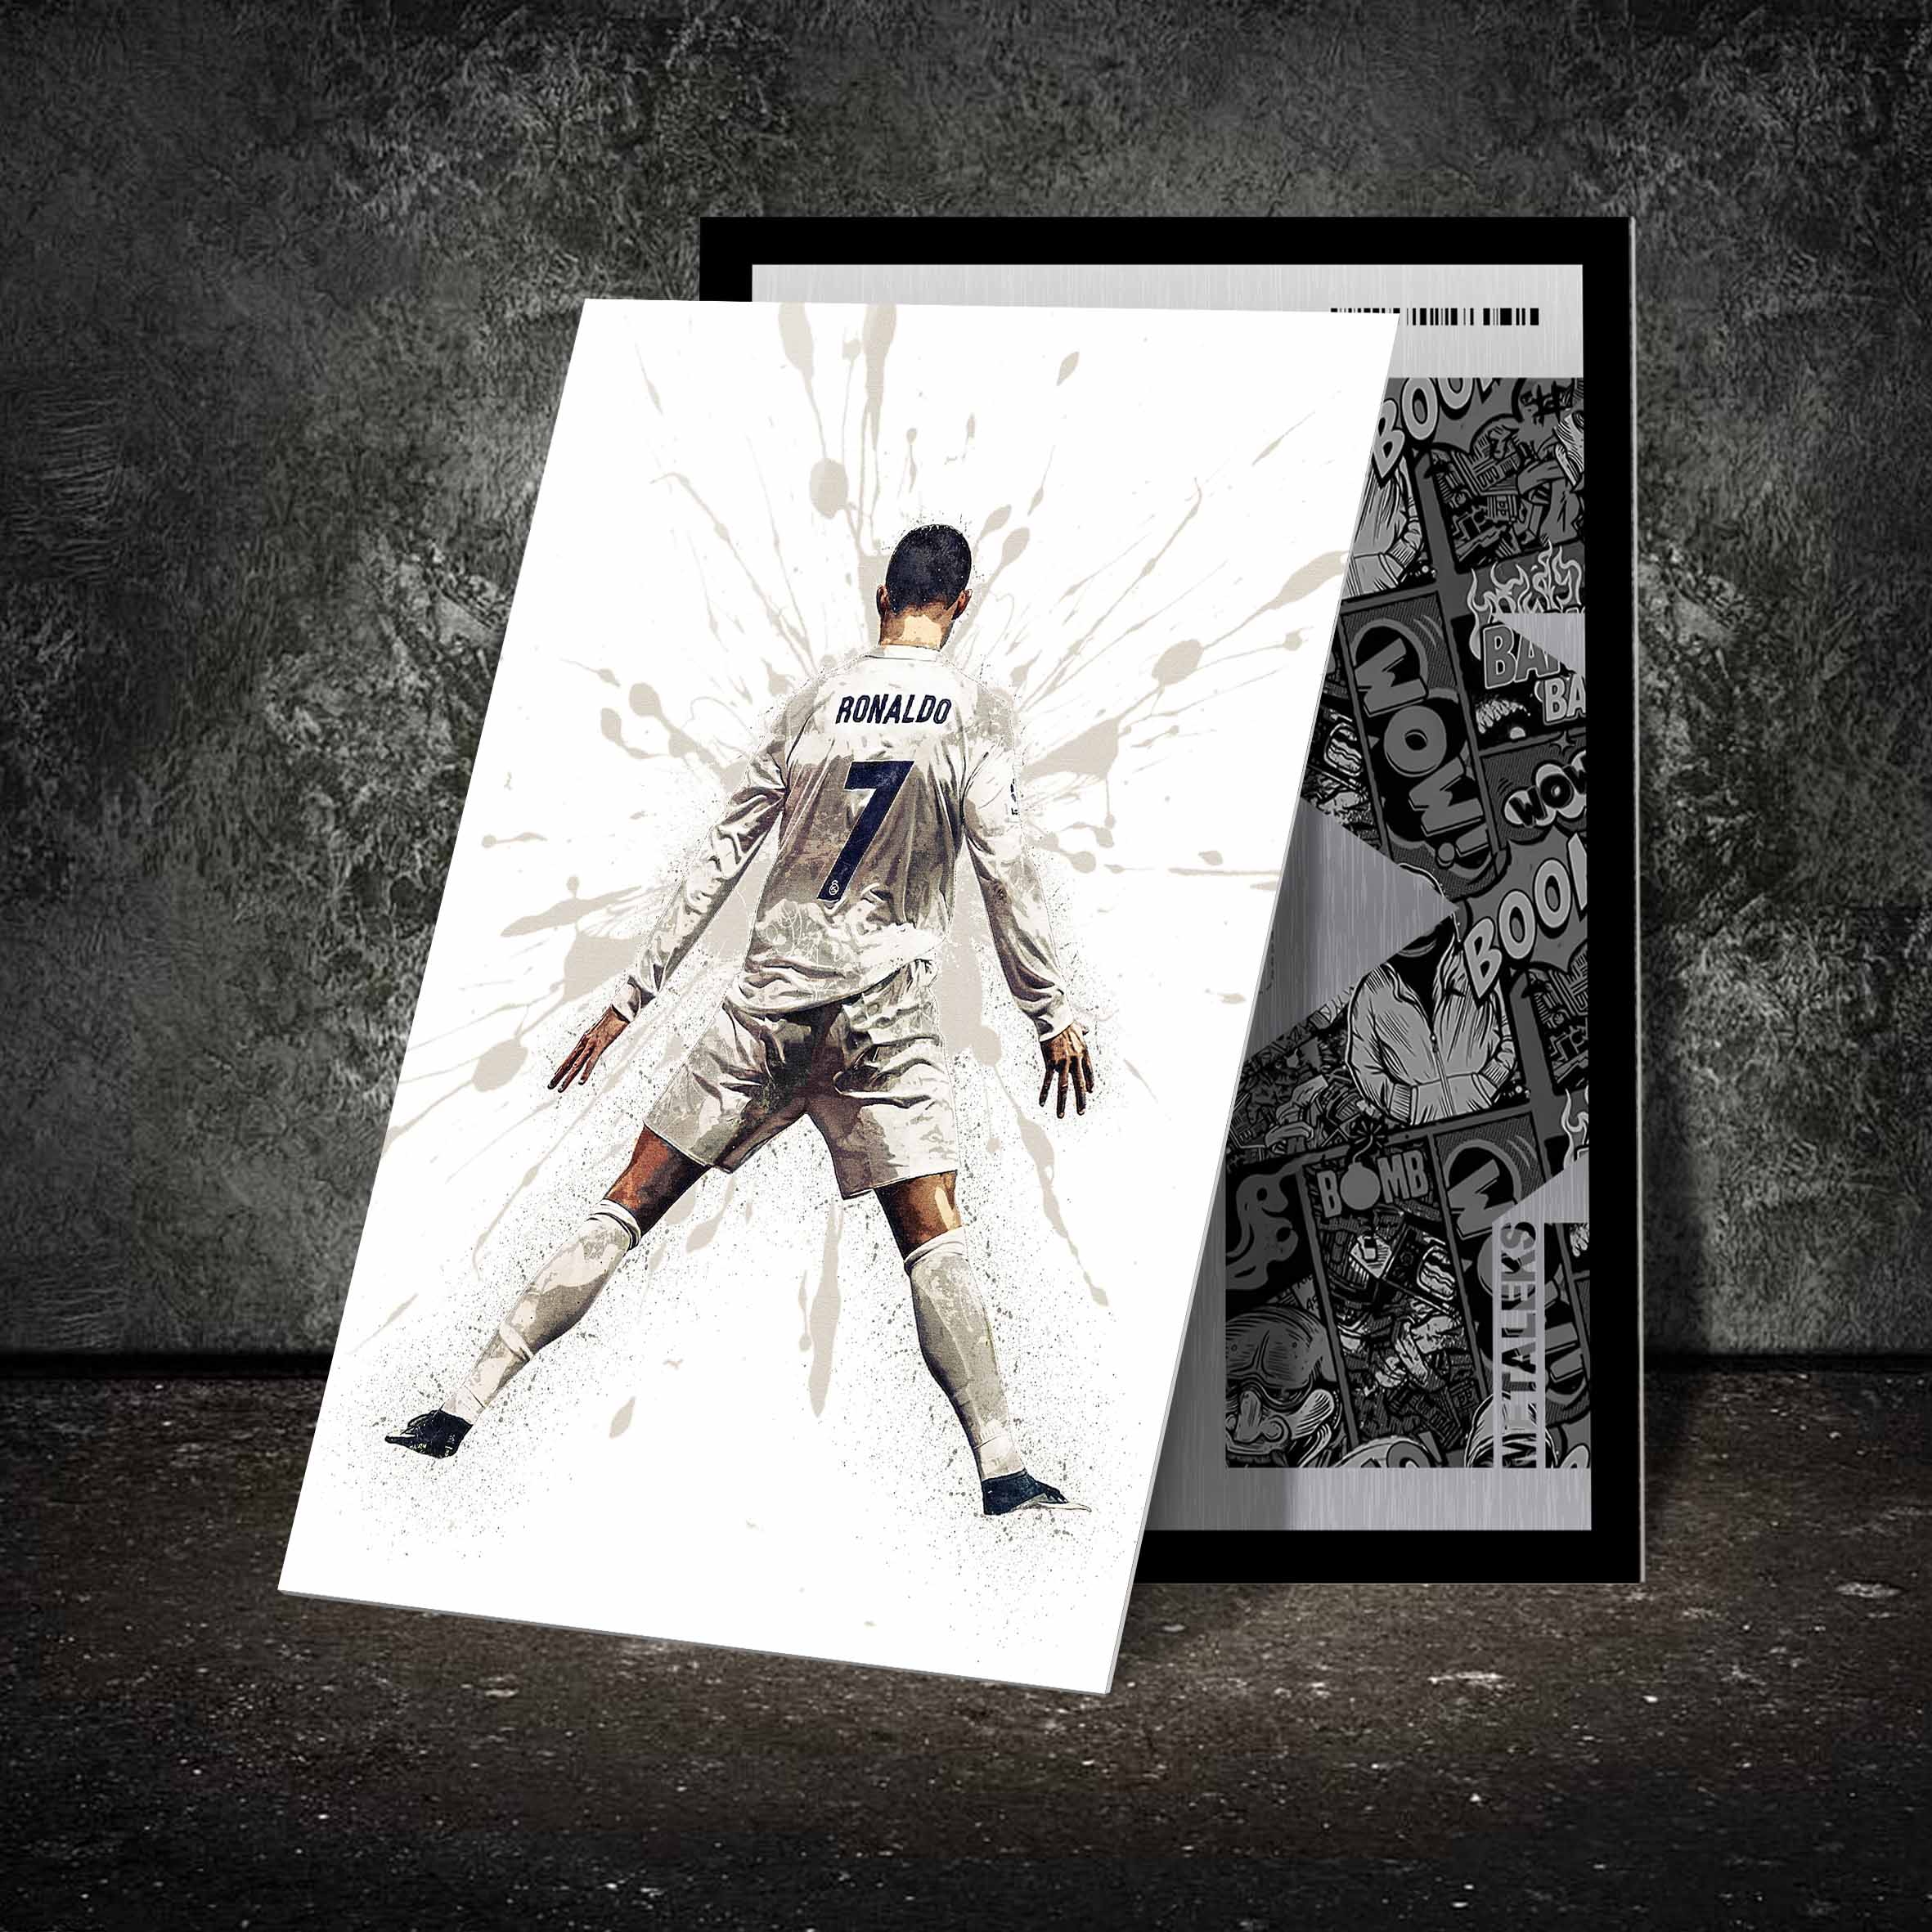 Ronaldo Real Madrid poster-designed by @Hoang Van Thuan